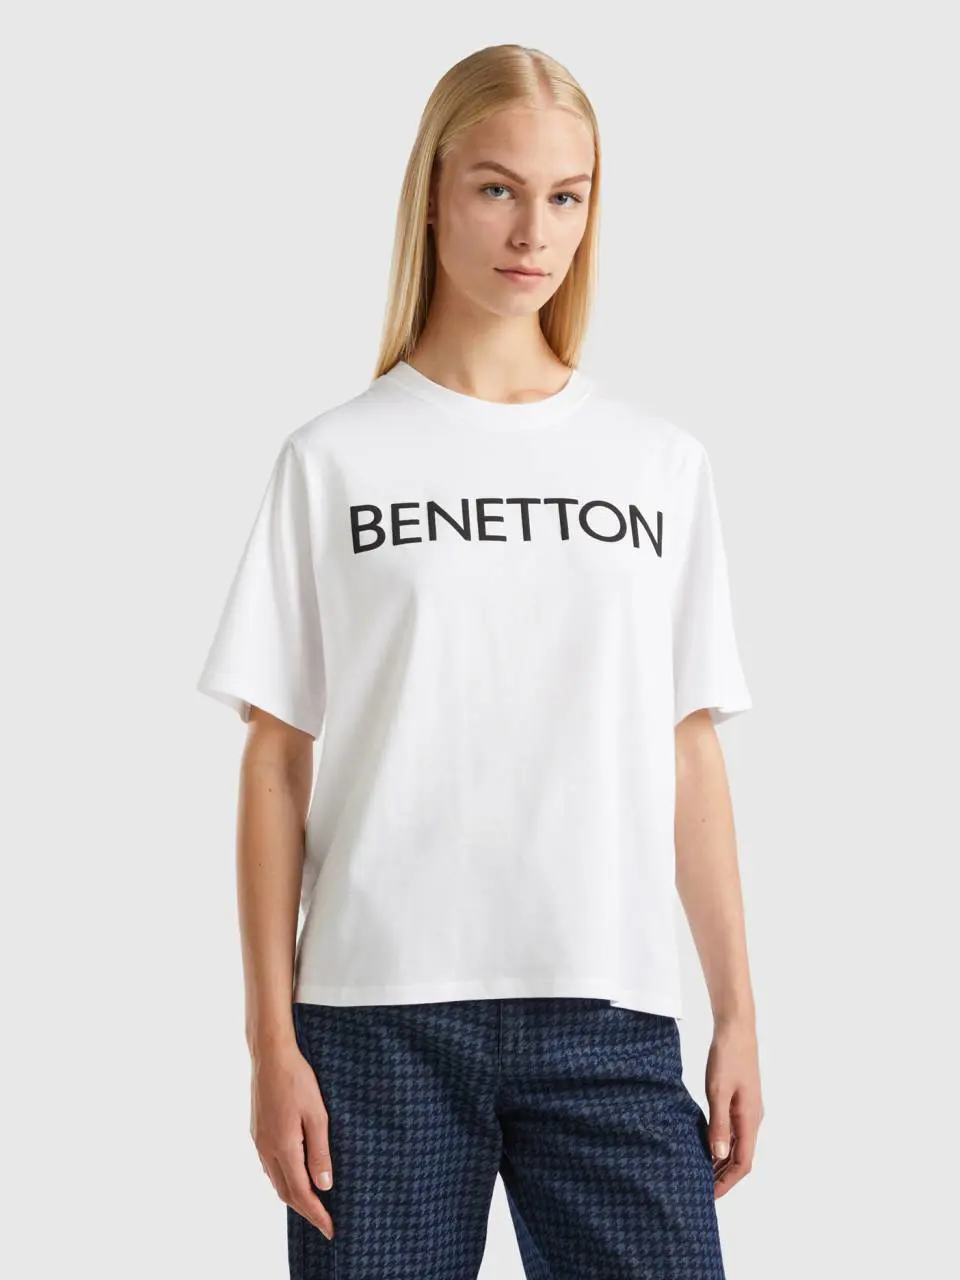 Benetton t-shirt with logo text. 1